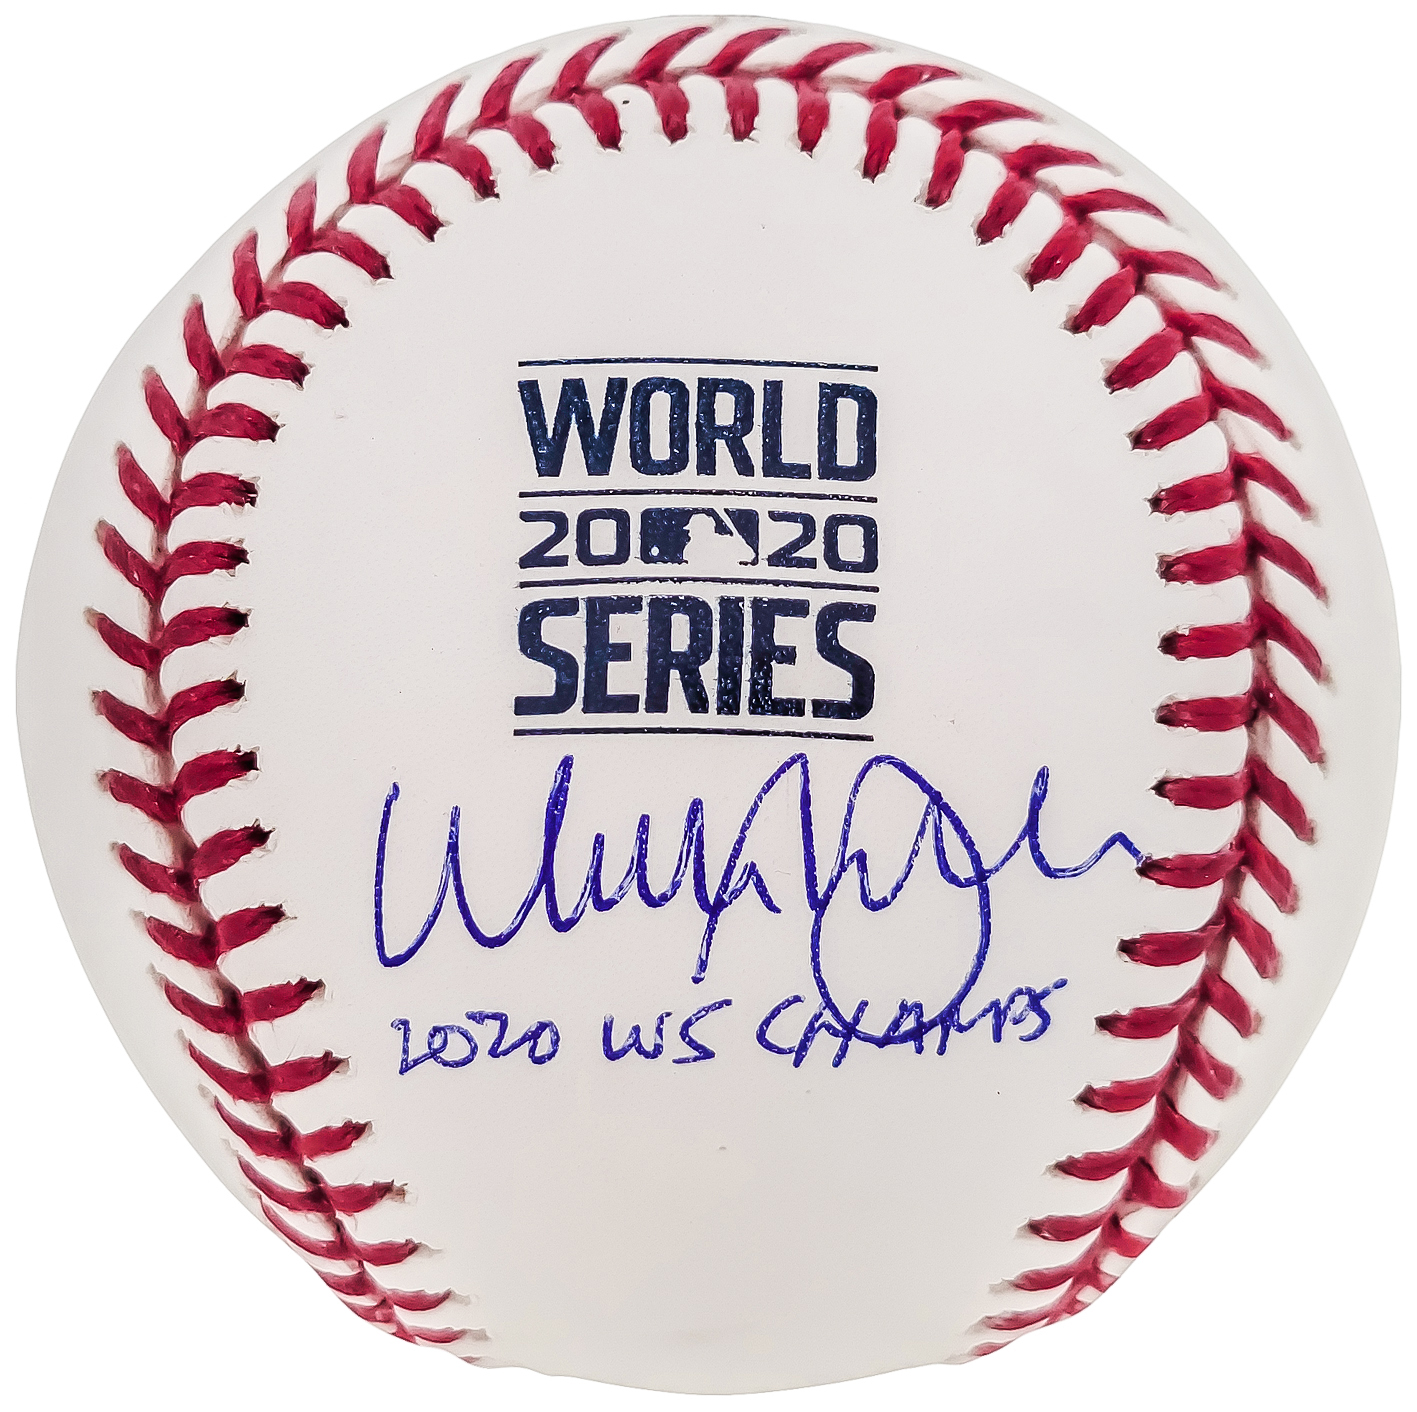 Walker Buehler Authentic Autographed Los Angeles Dodgers Jersey